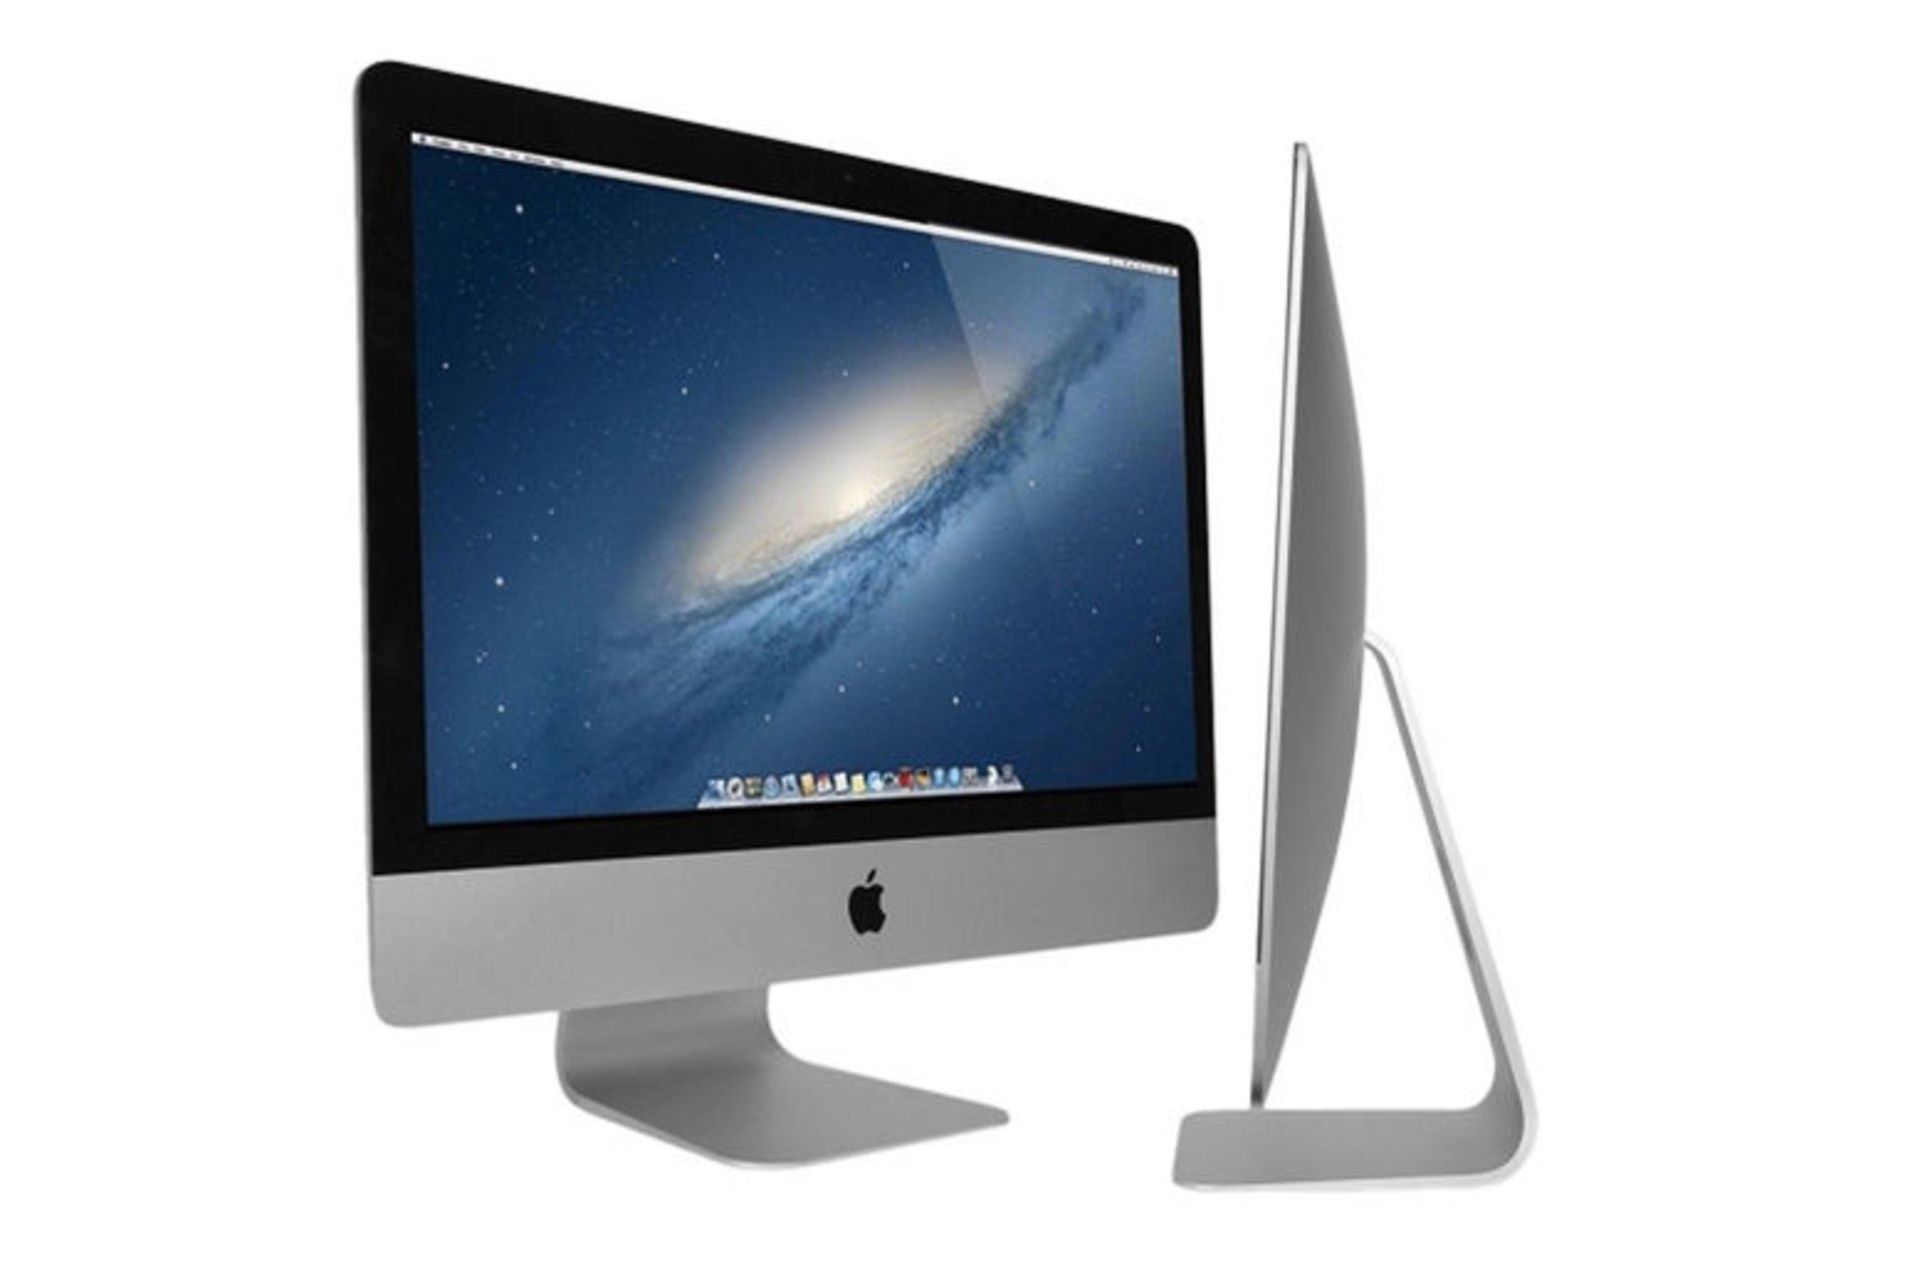 Apple iMac 21.5” A1418 Big Sur (2014 ) Intel Core i5-4260U 8GB Memory 500GB HD WiFi Office